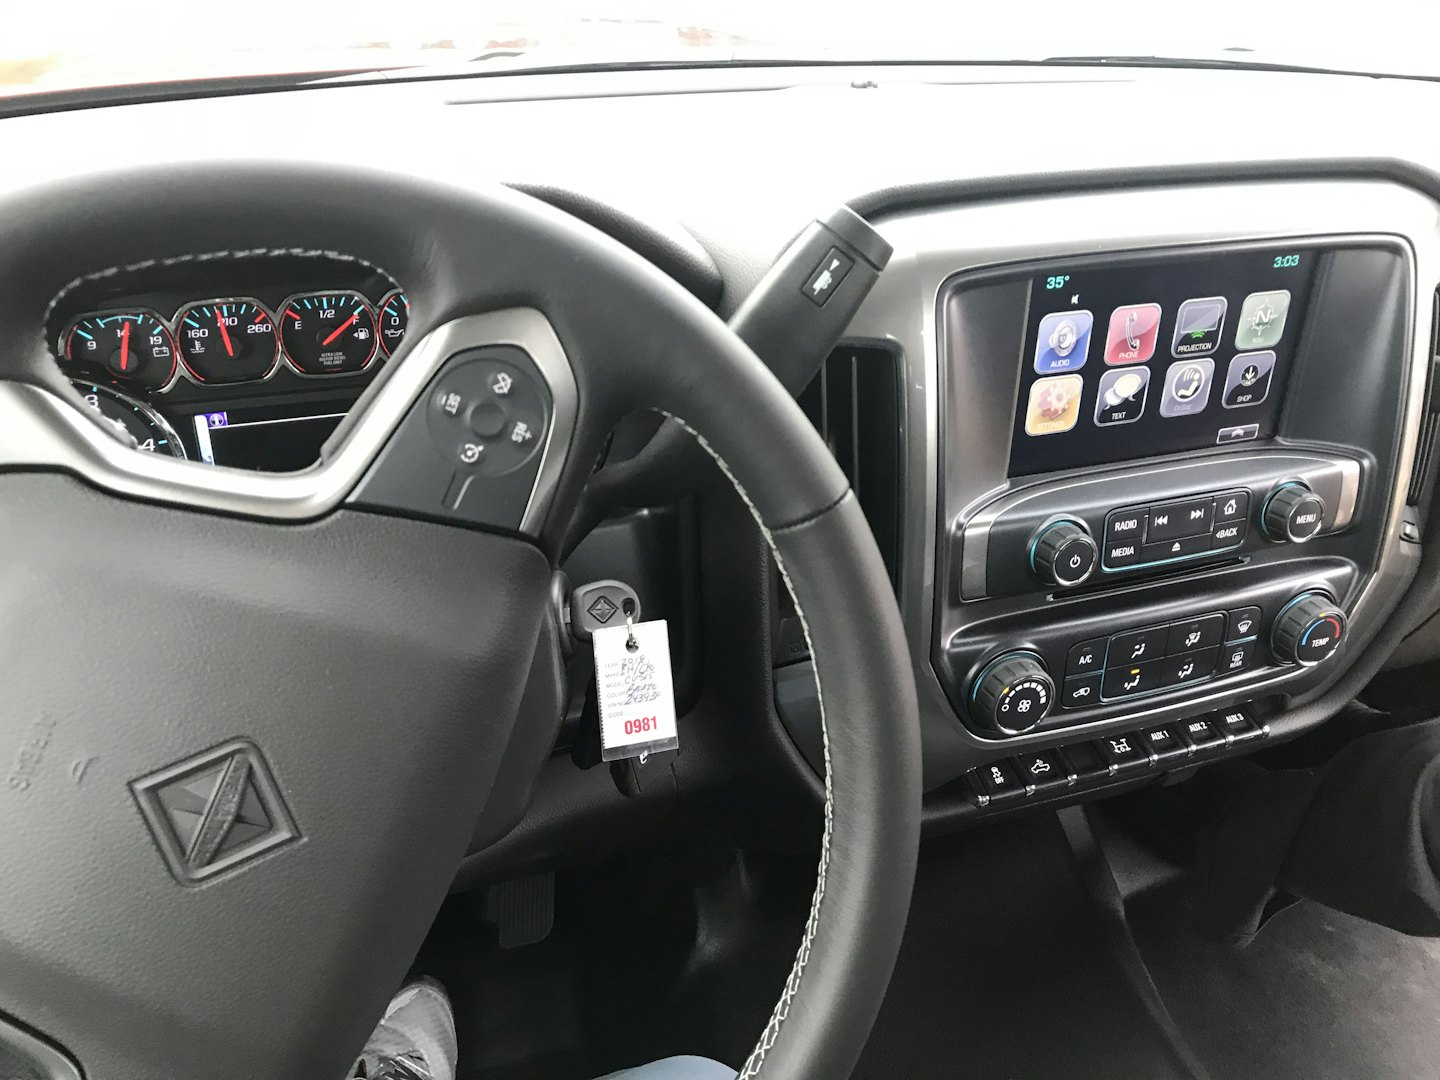 interior cab dash for the international class 4/5 cv series truck